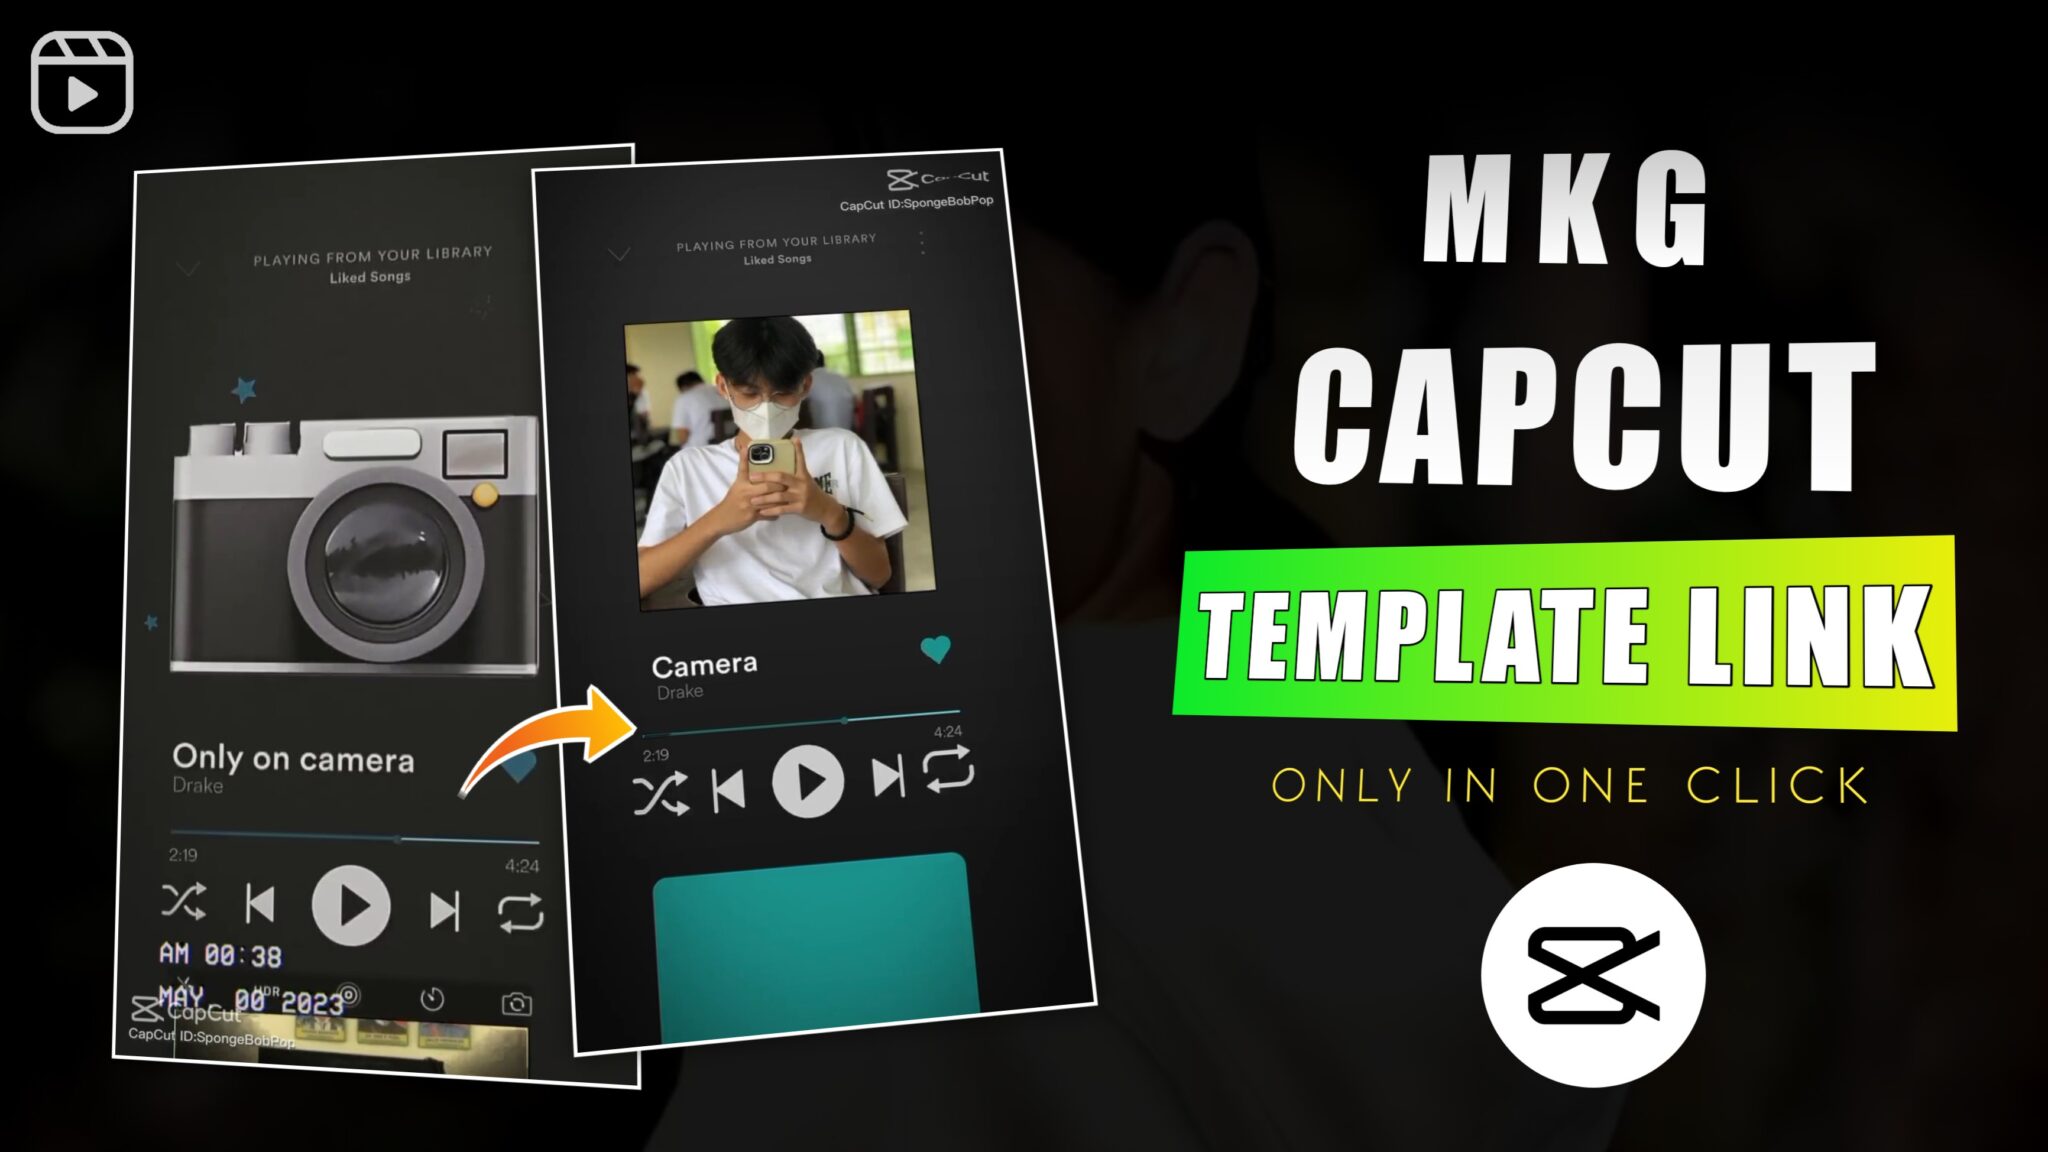 mkg-keyframe-capcut-template-link-new-trend-mang-idik